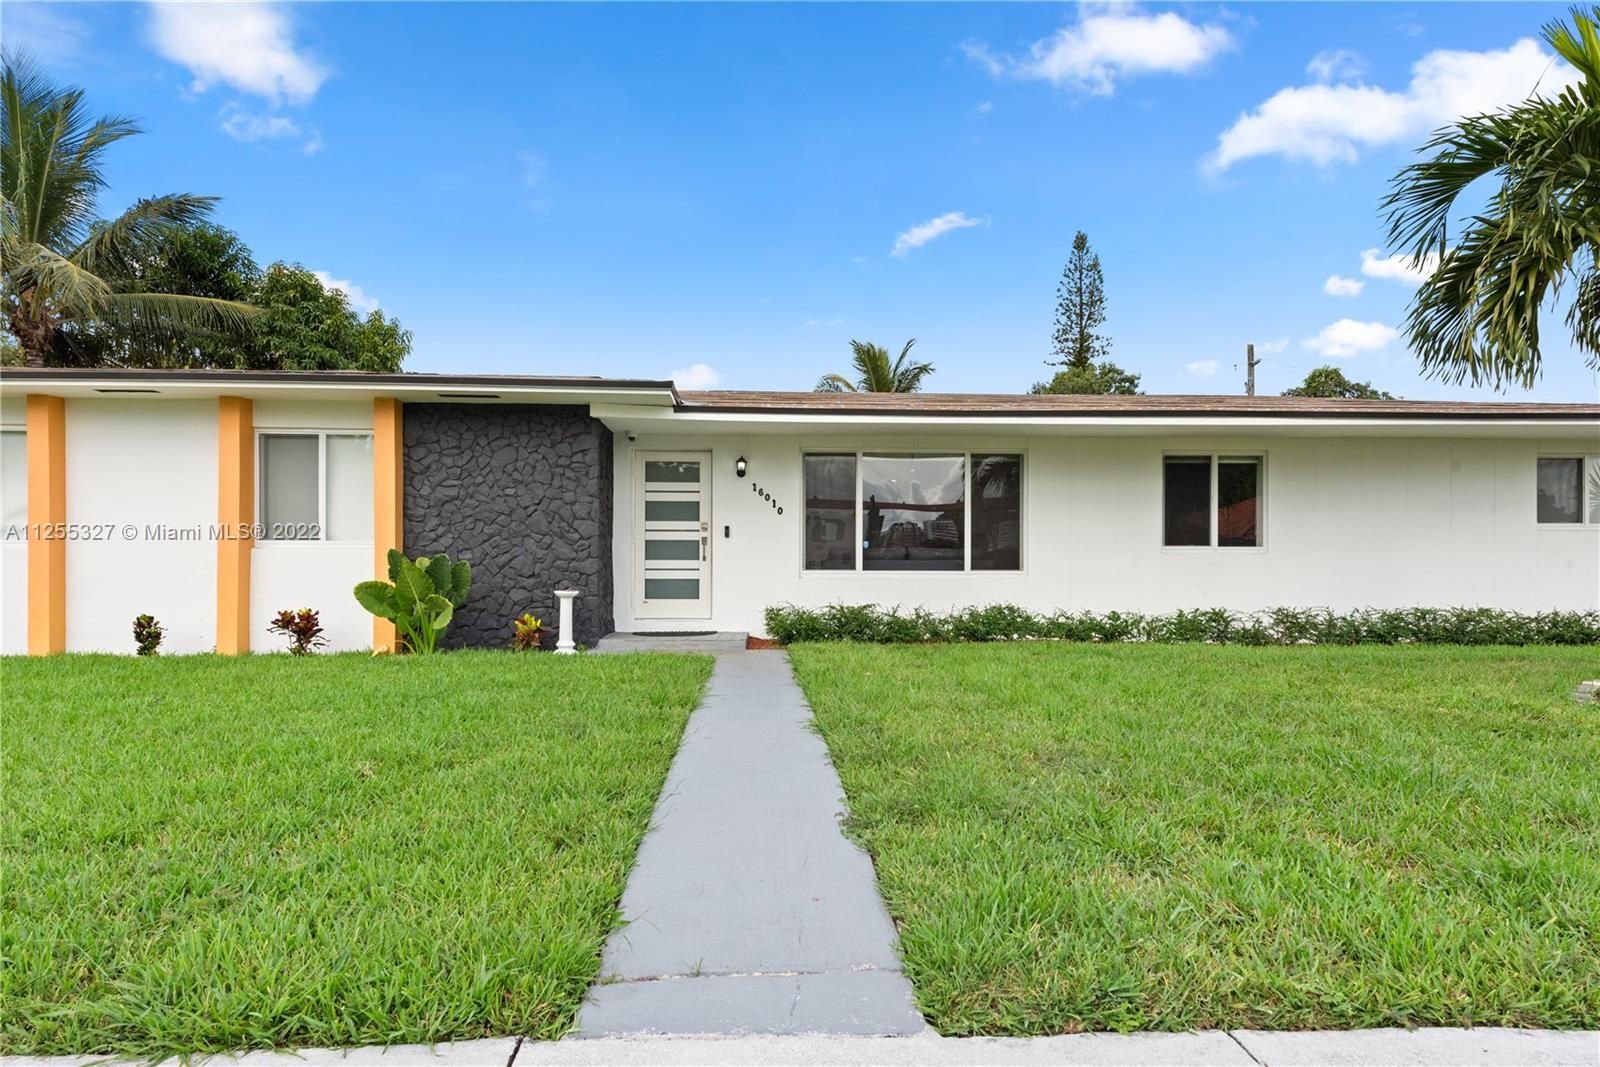 Real estate property located at 16010 37th Ct, Miami-Dade County, Miami Gardens, FL